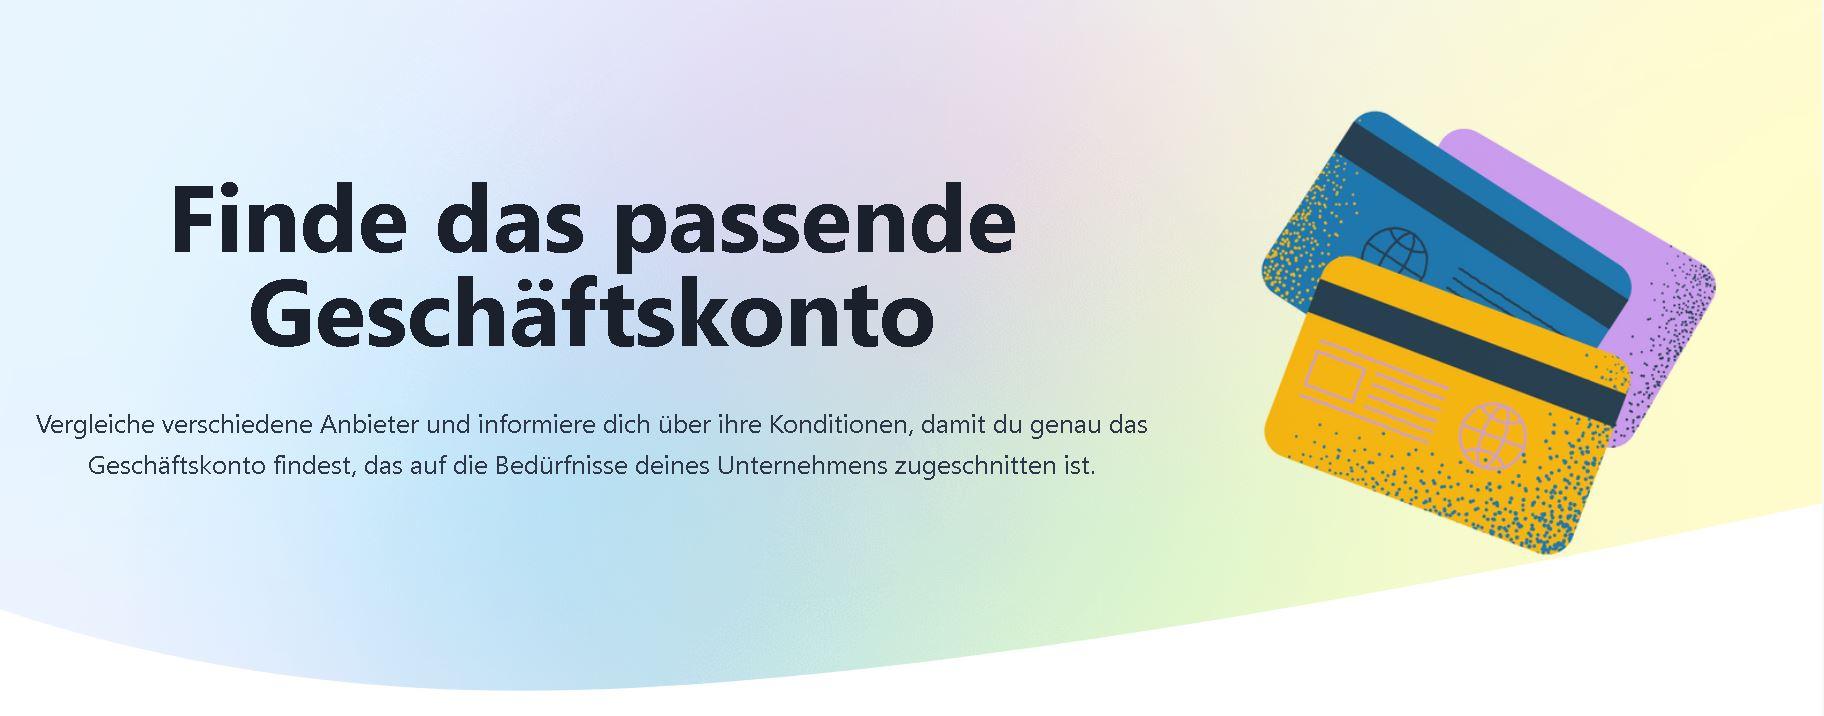 geschaeftskonto.io / startup from Dresden / Background